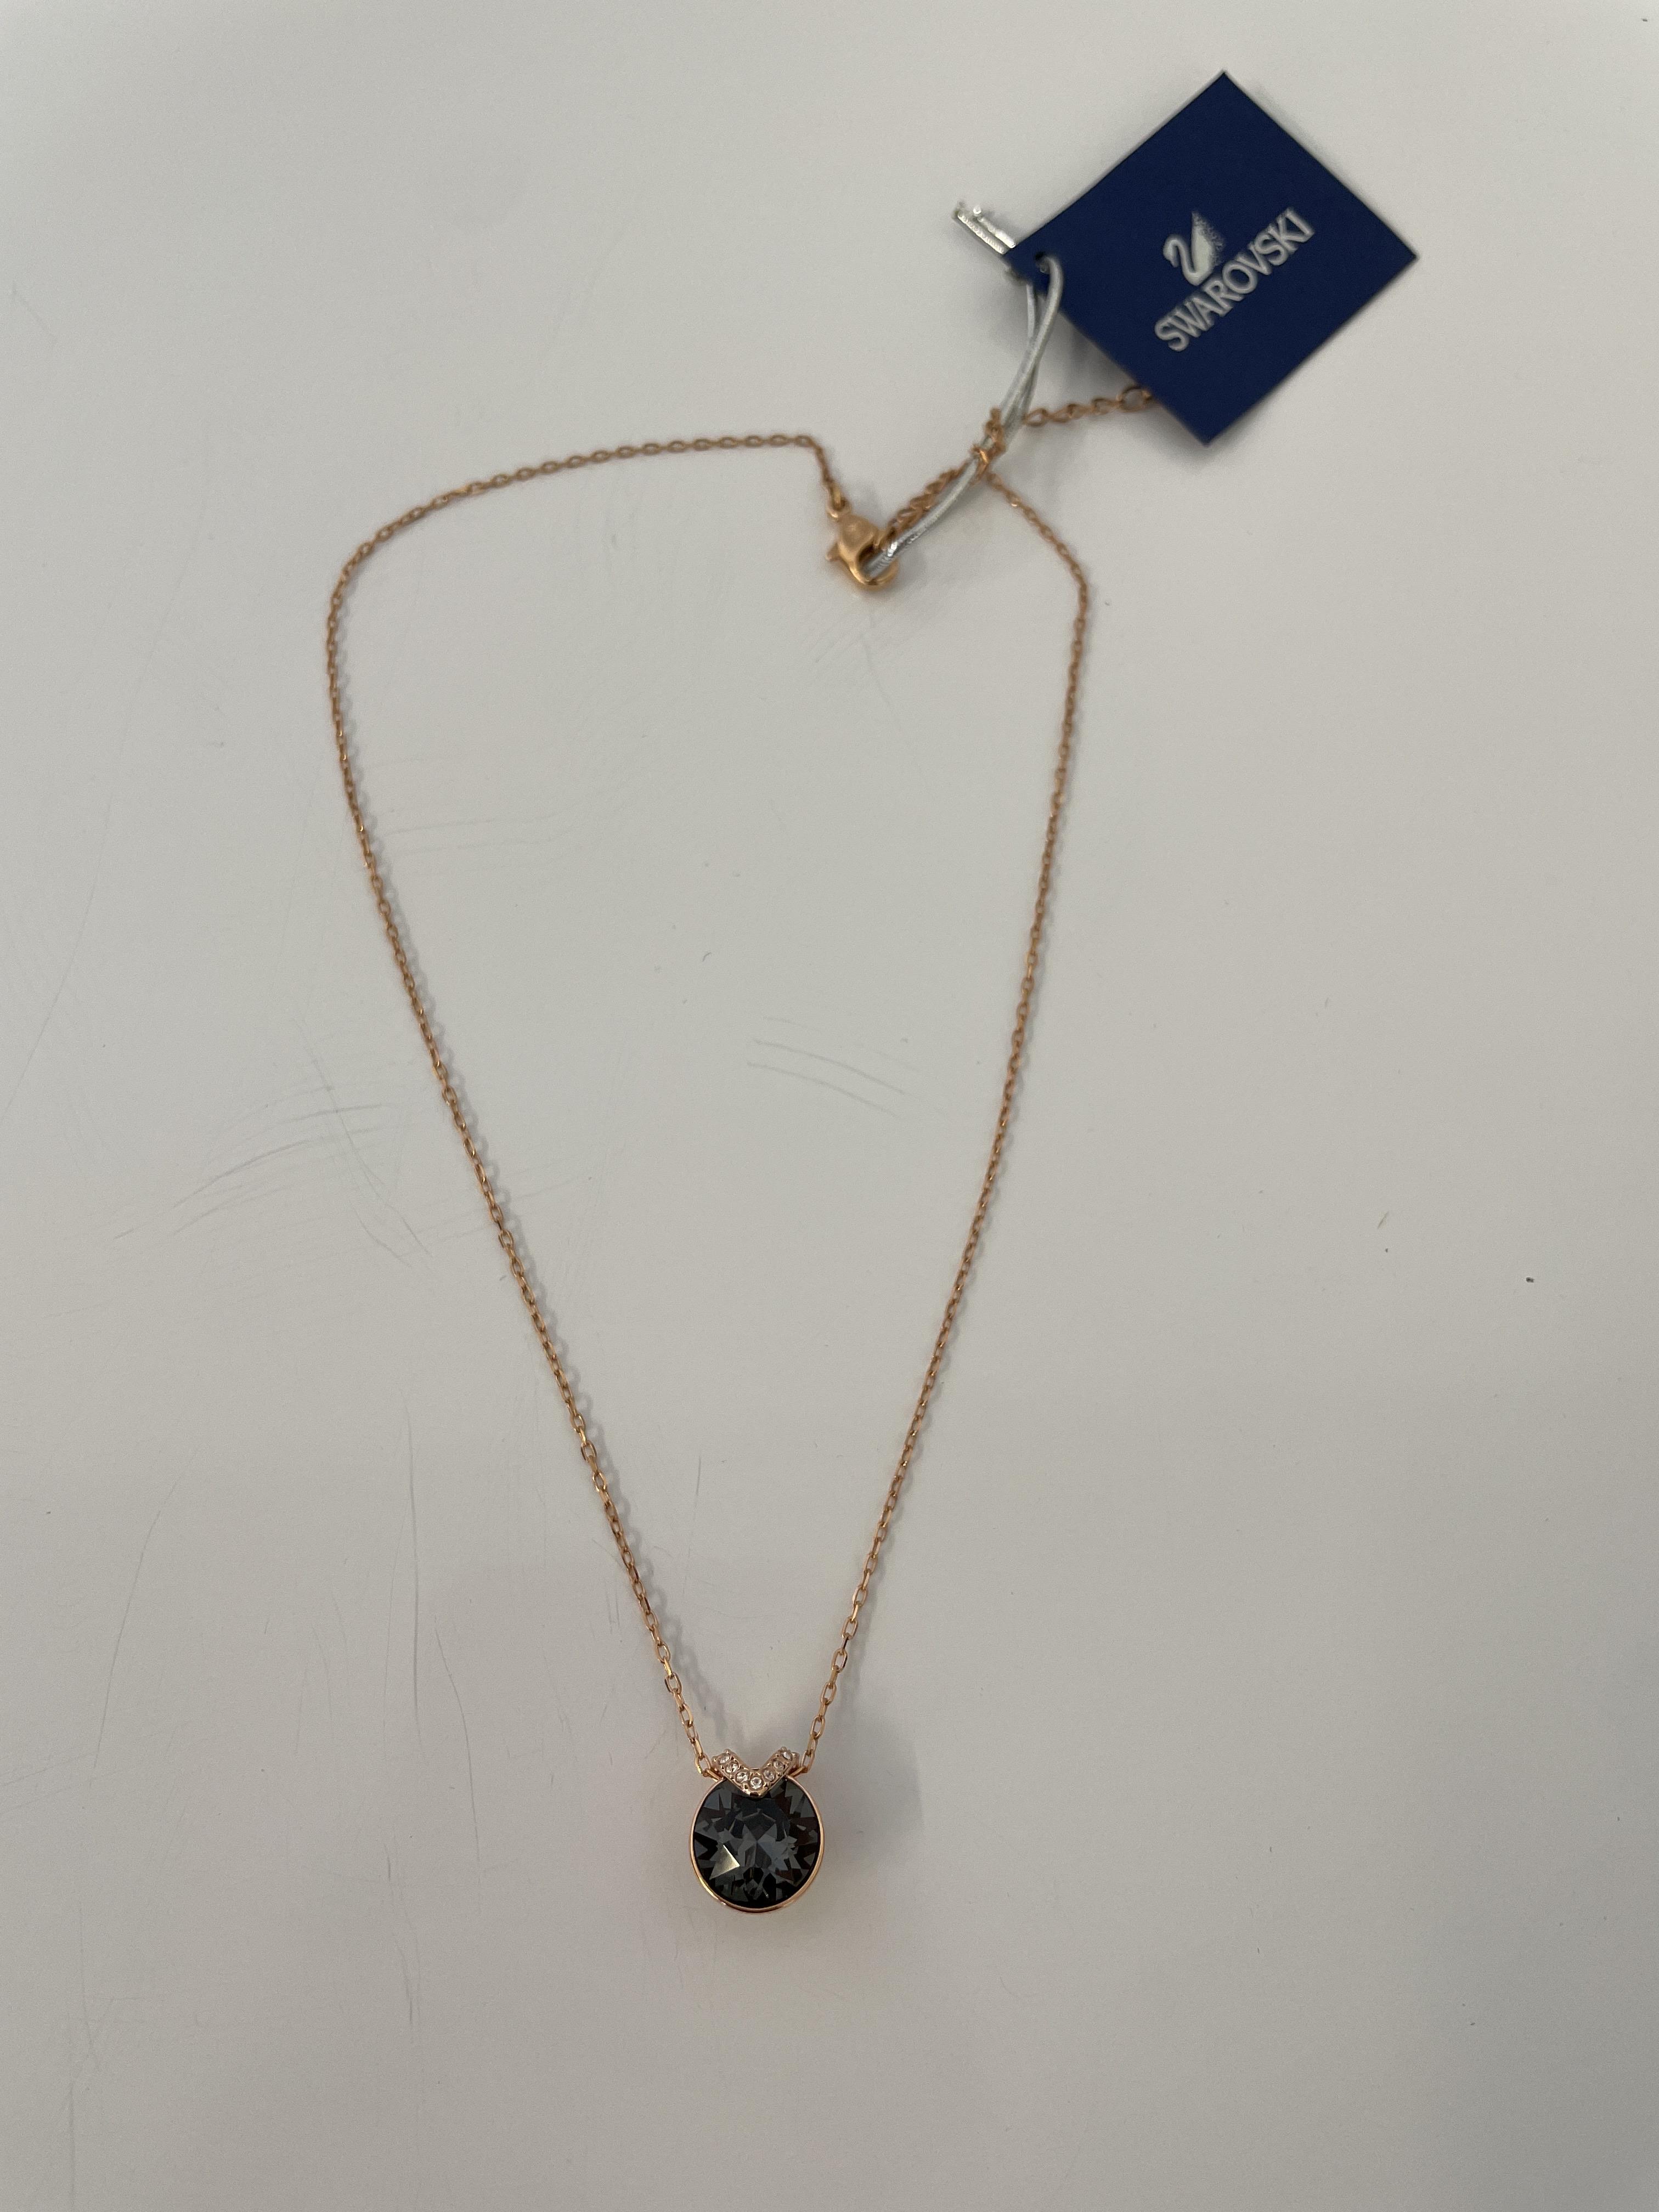 SWAROVSKI. A Swarovski pendant/necklace, boxed. 5349962 IMPORTANT: Bidding via the-saleroom.com